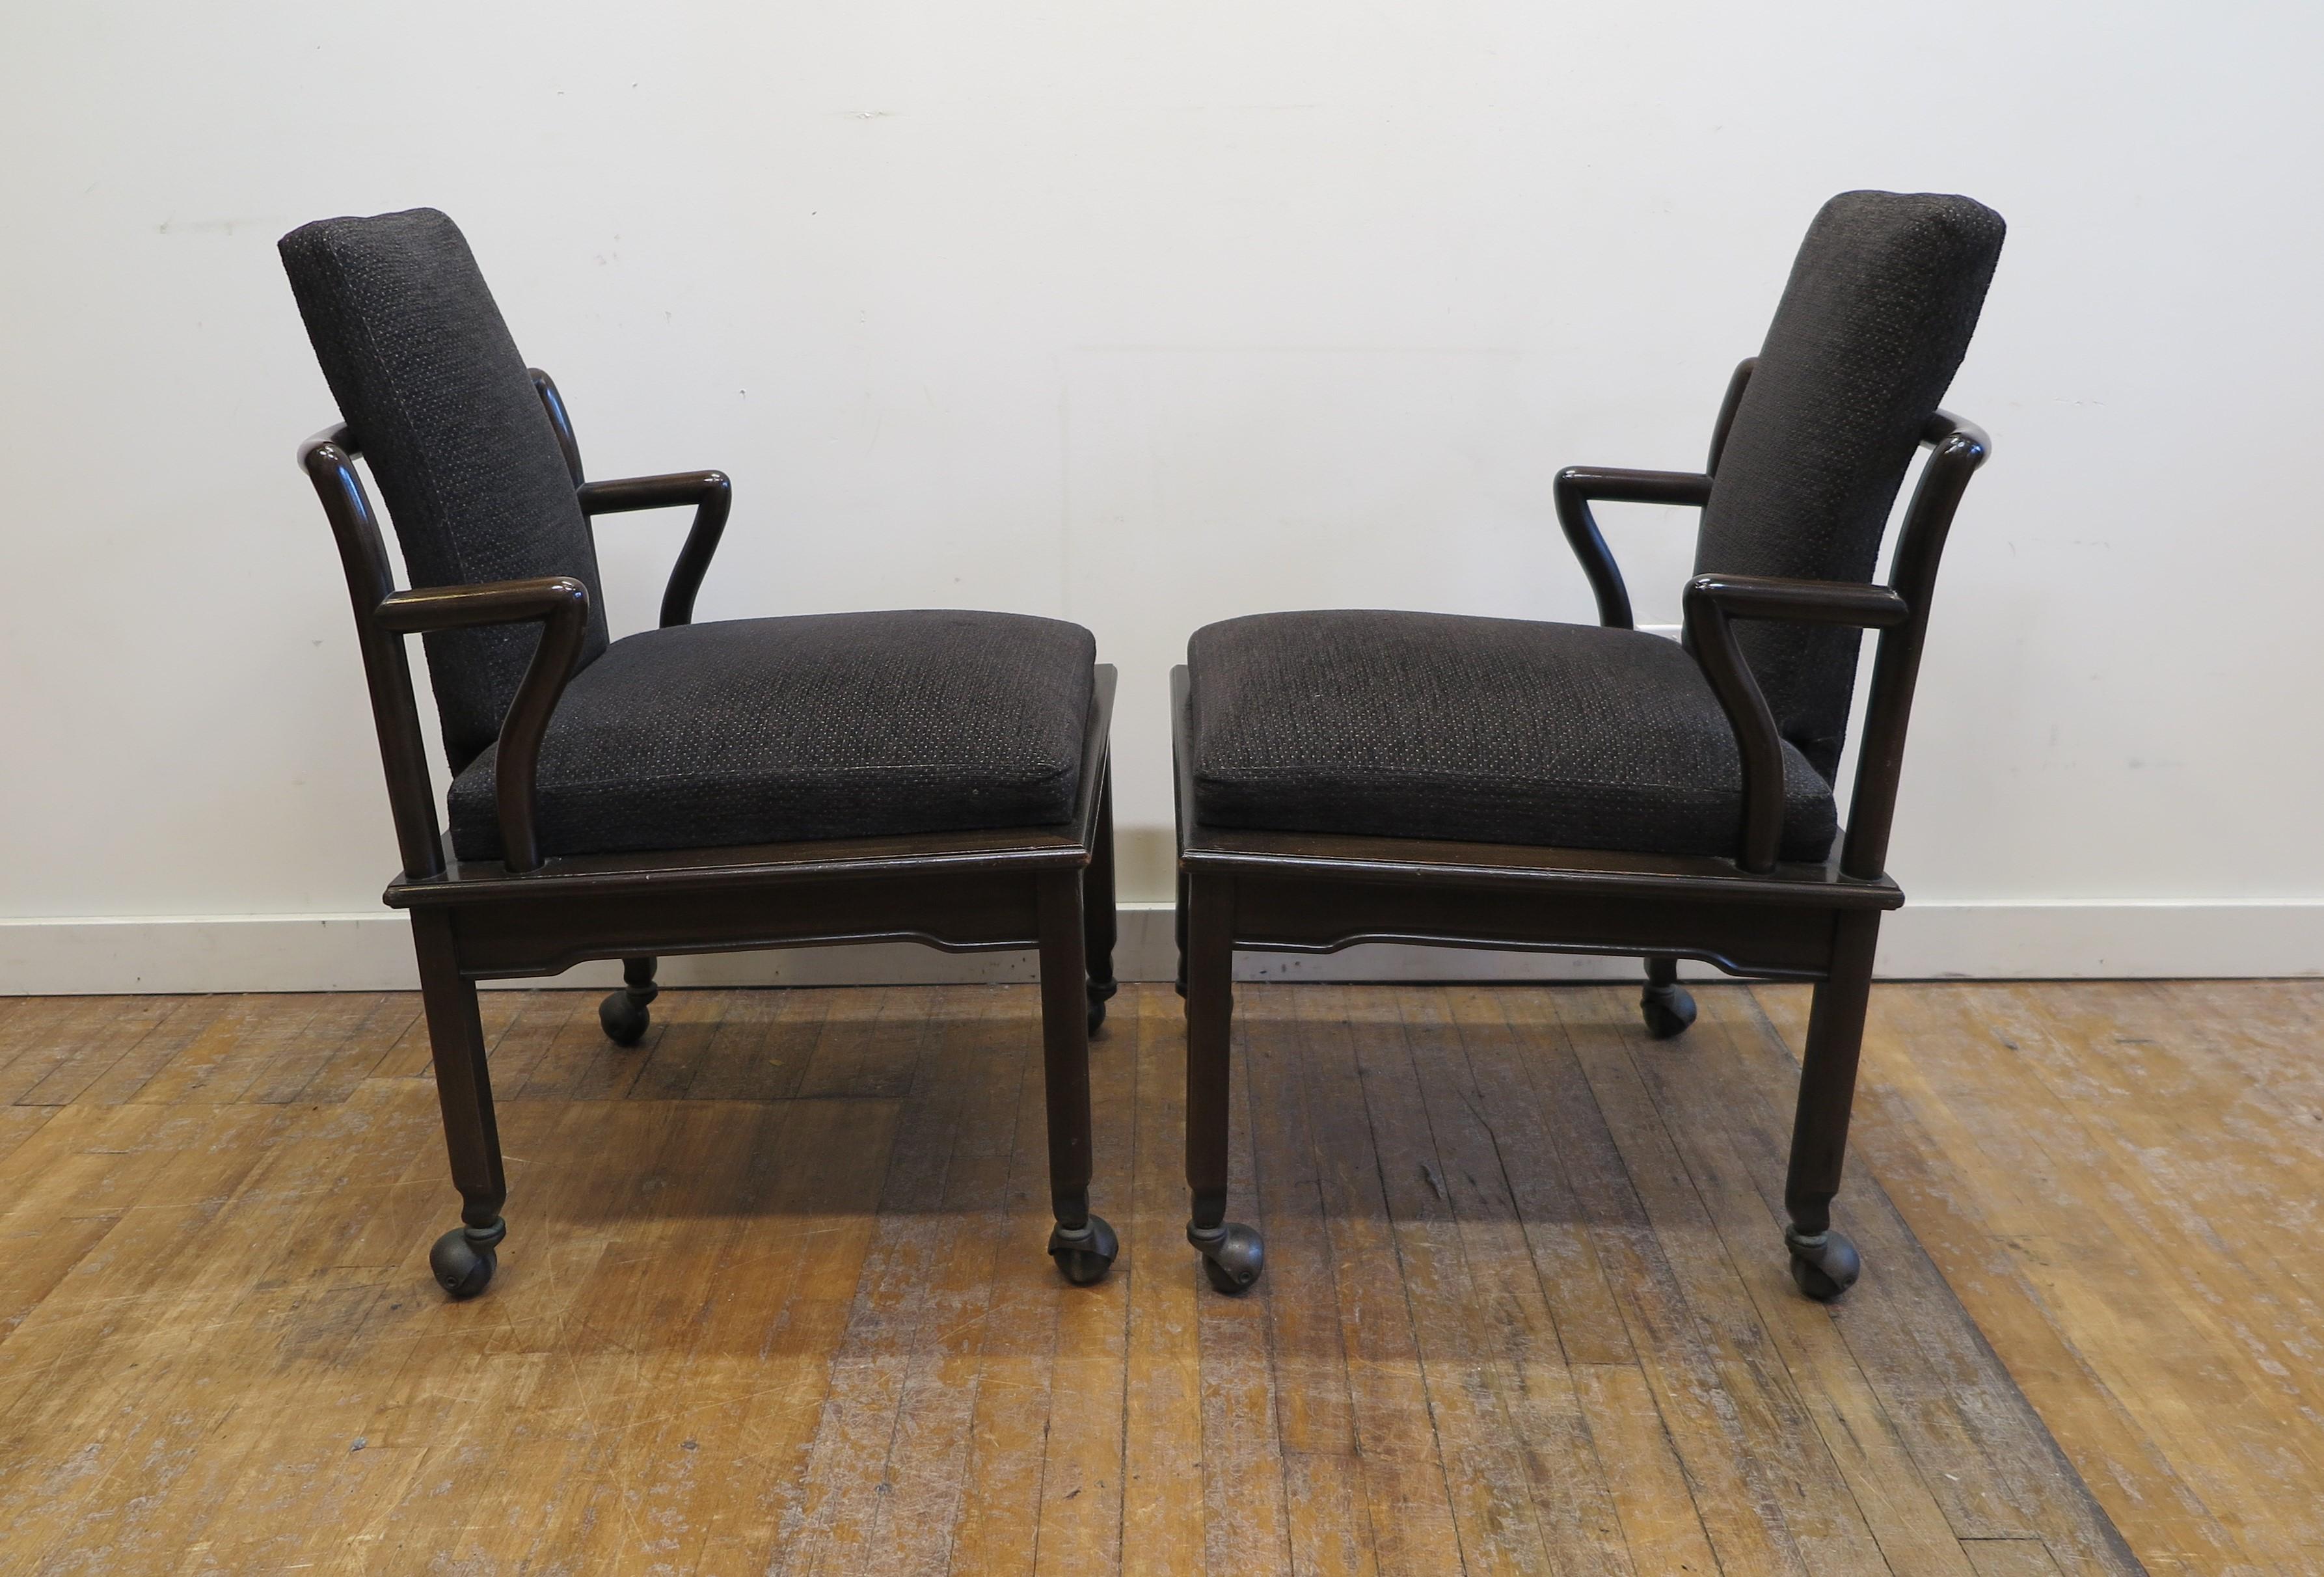 Walnut John Widdicomb Asian Inspired Chairs For Sale